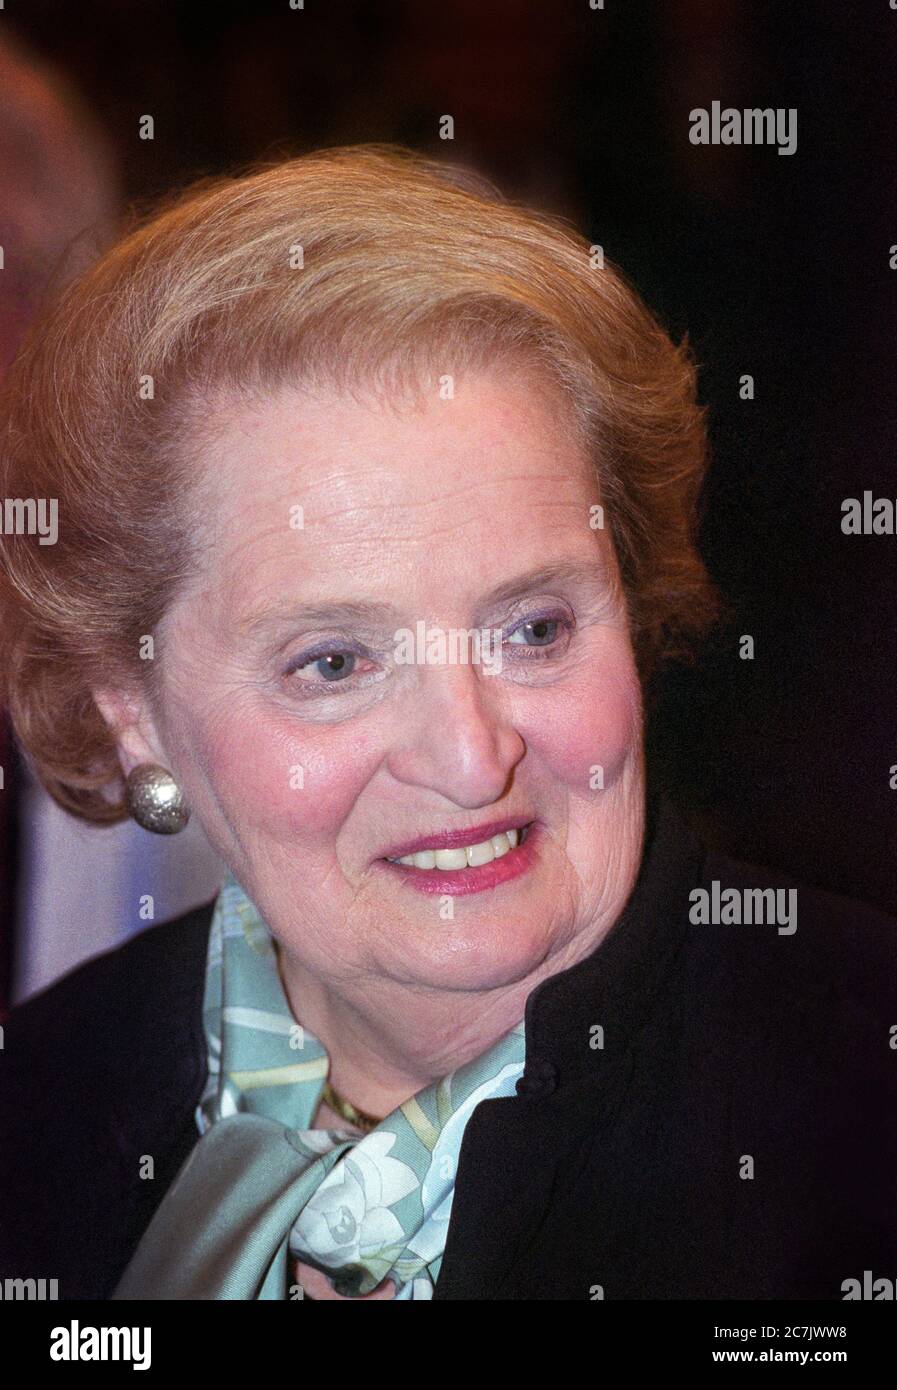 Former U.S. Secretary of State, Madeleine Albright, before speaking in Santa Clara, California in 2004. Stock Photo